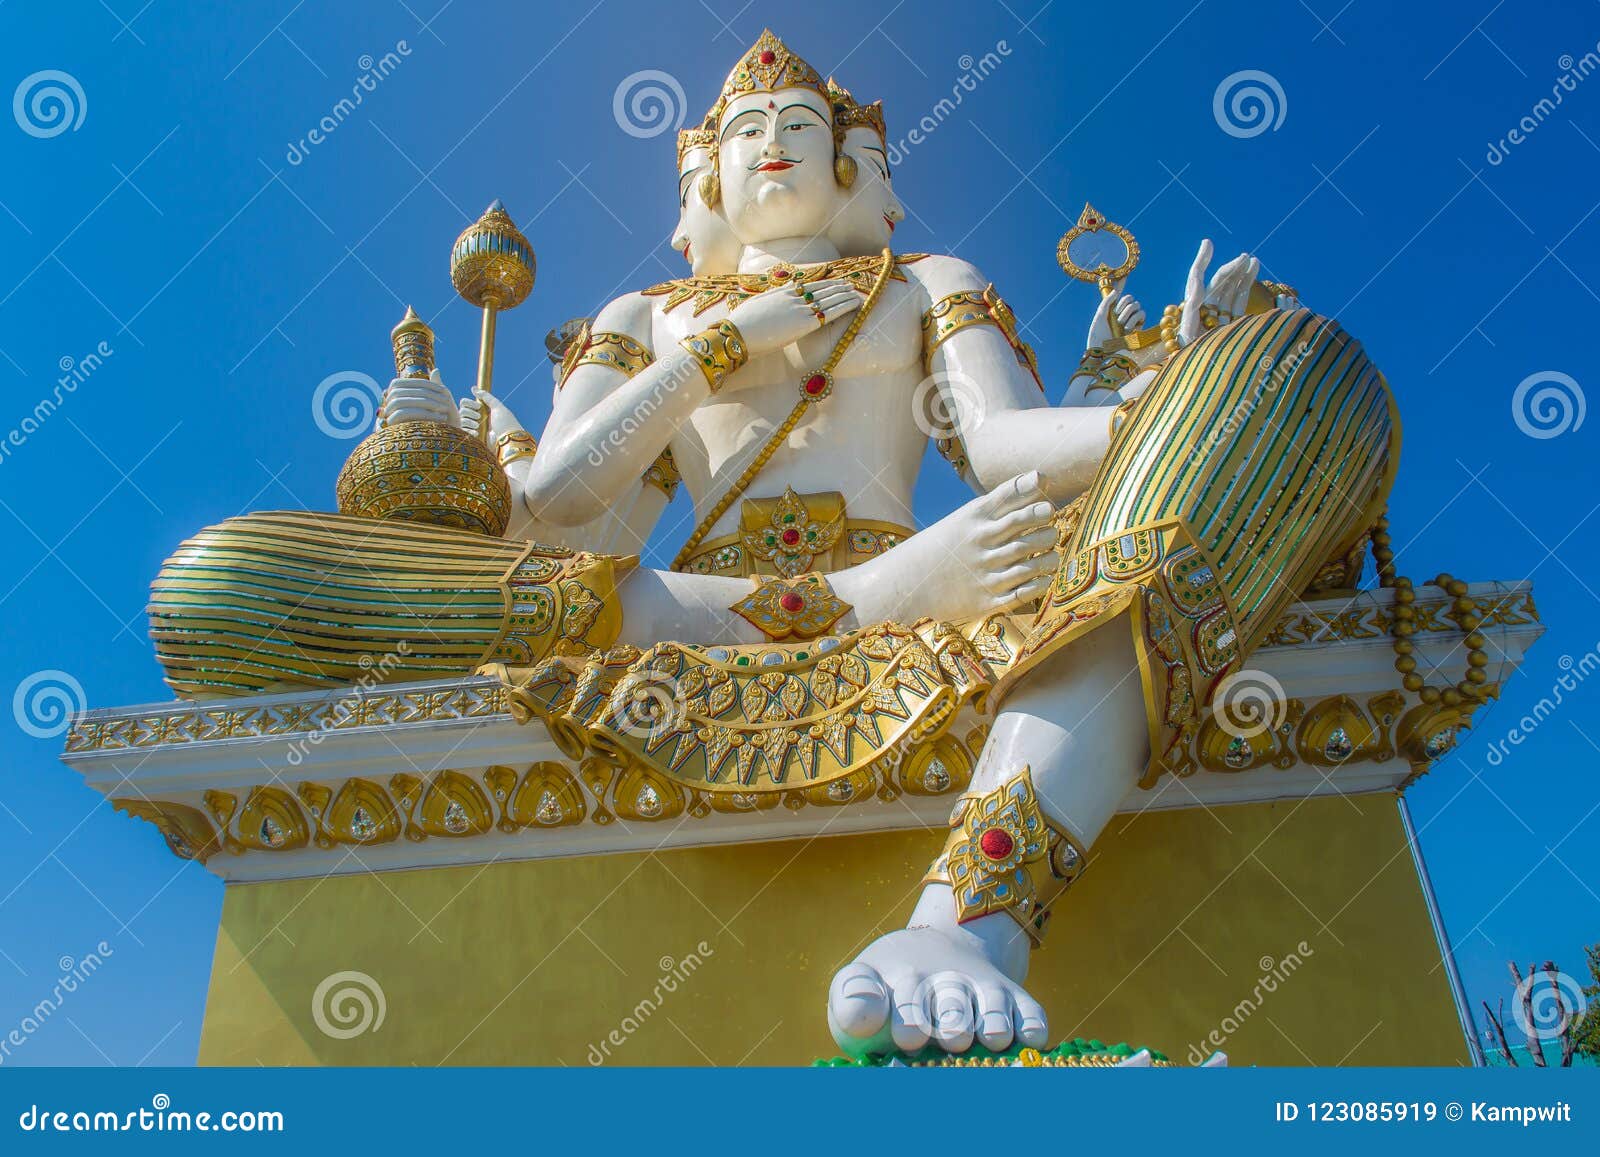 Giant White Brahma Statue with Blue Sky Background. Brahma is the Hindu ...